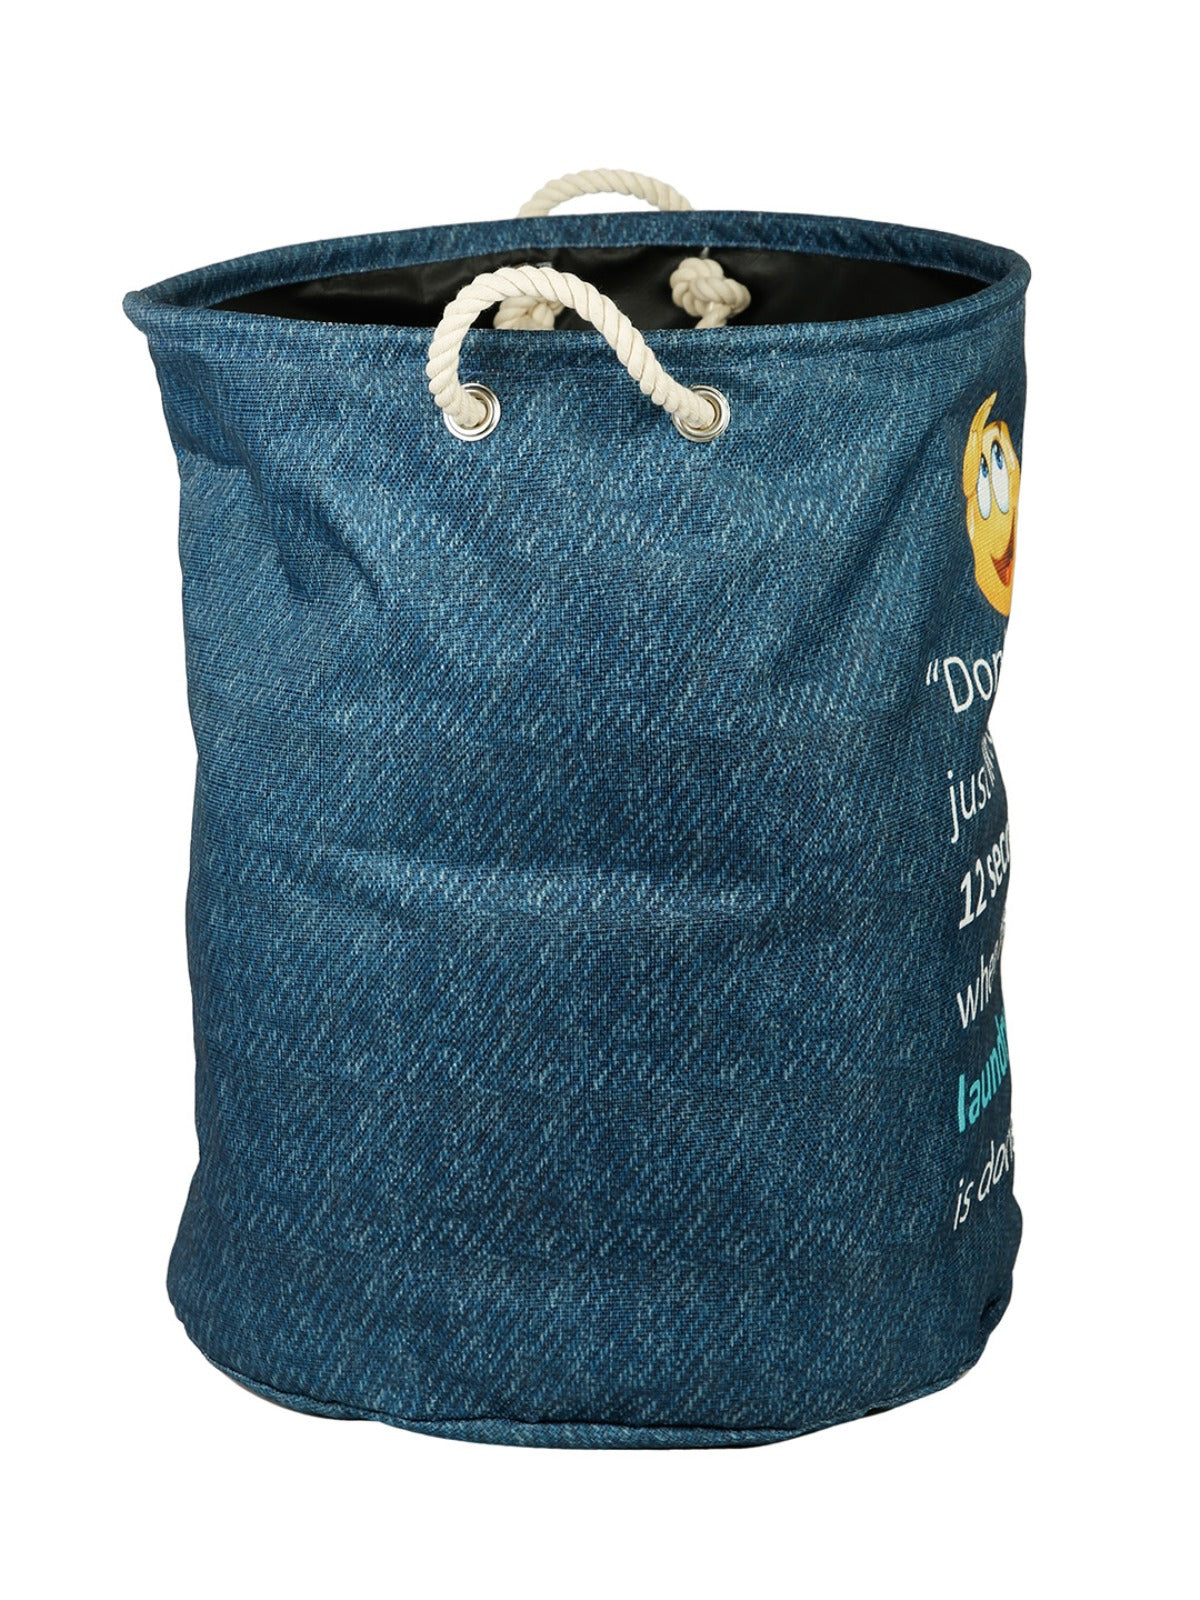 Polyester Slub Text Print Laundry Bag  - Teal Blue